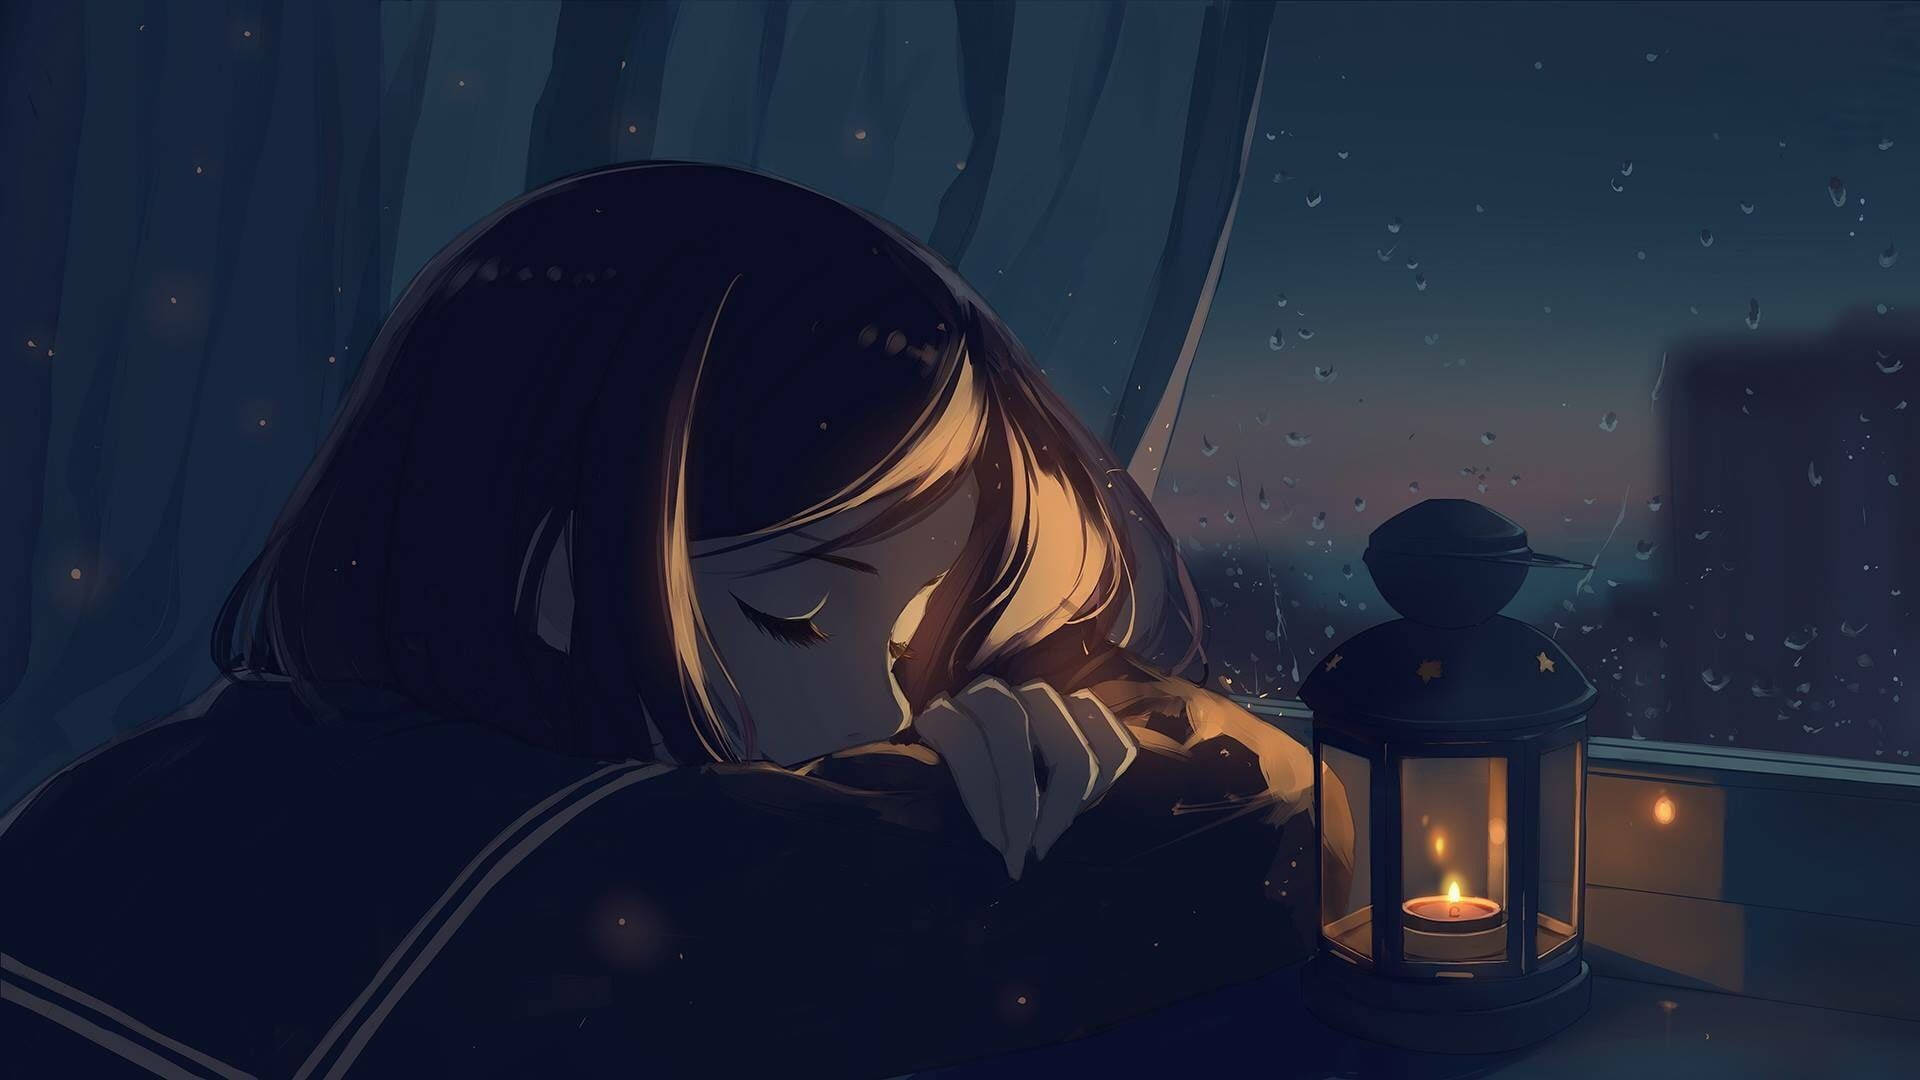 Download Anime Girl Sad Alone Sleeping With Lantern Wallpaper | Wallpapers .com